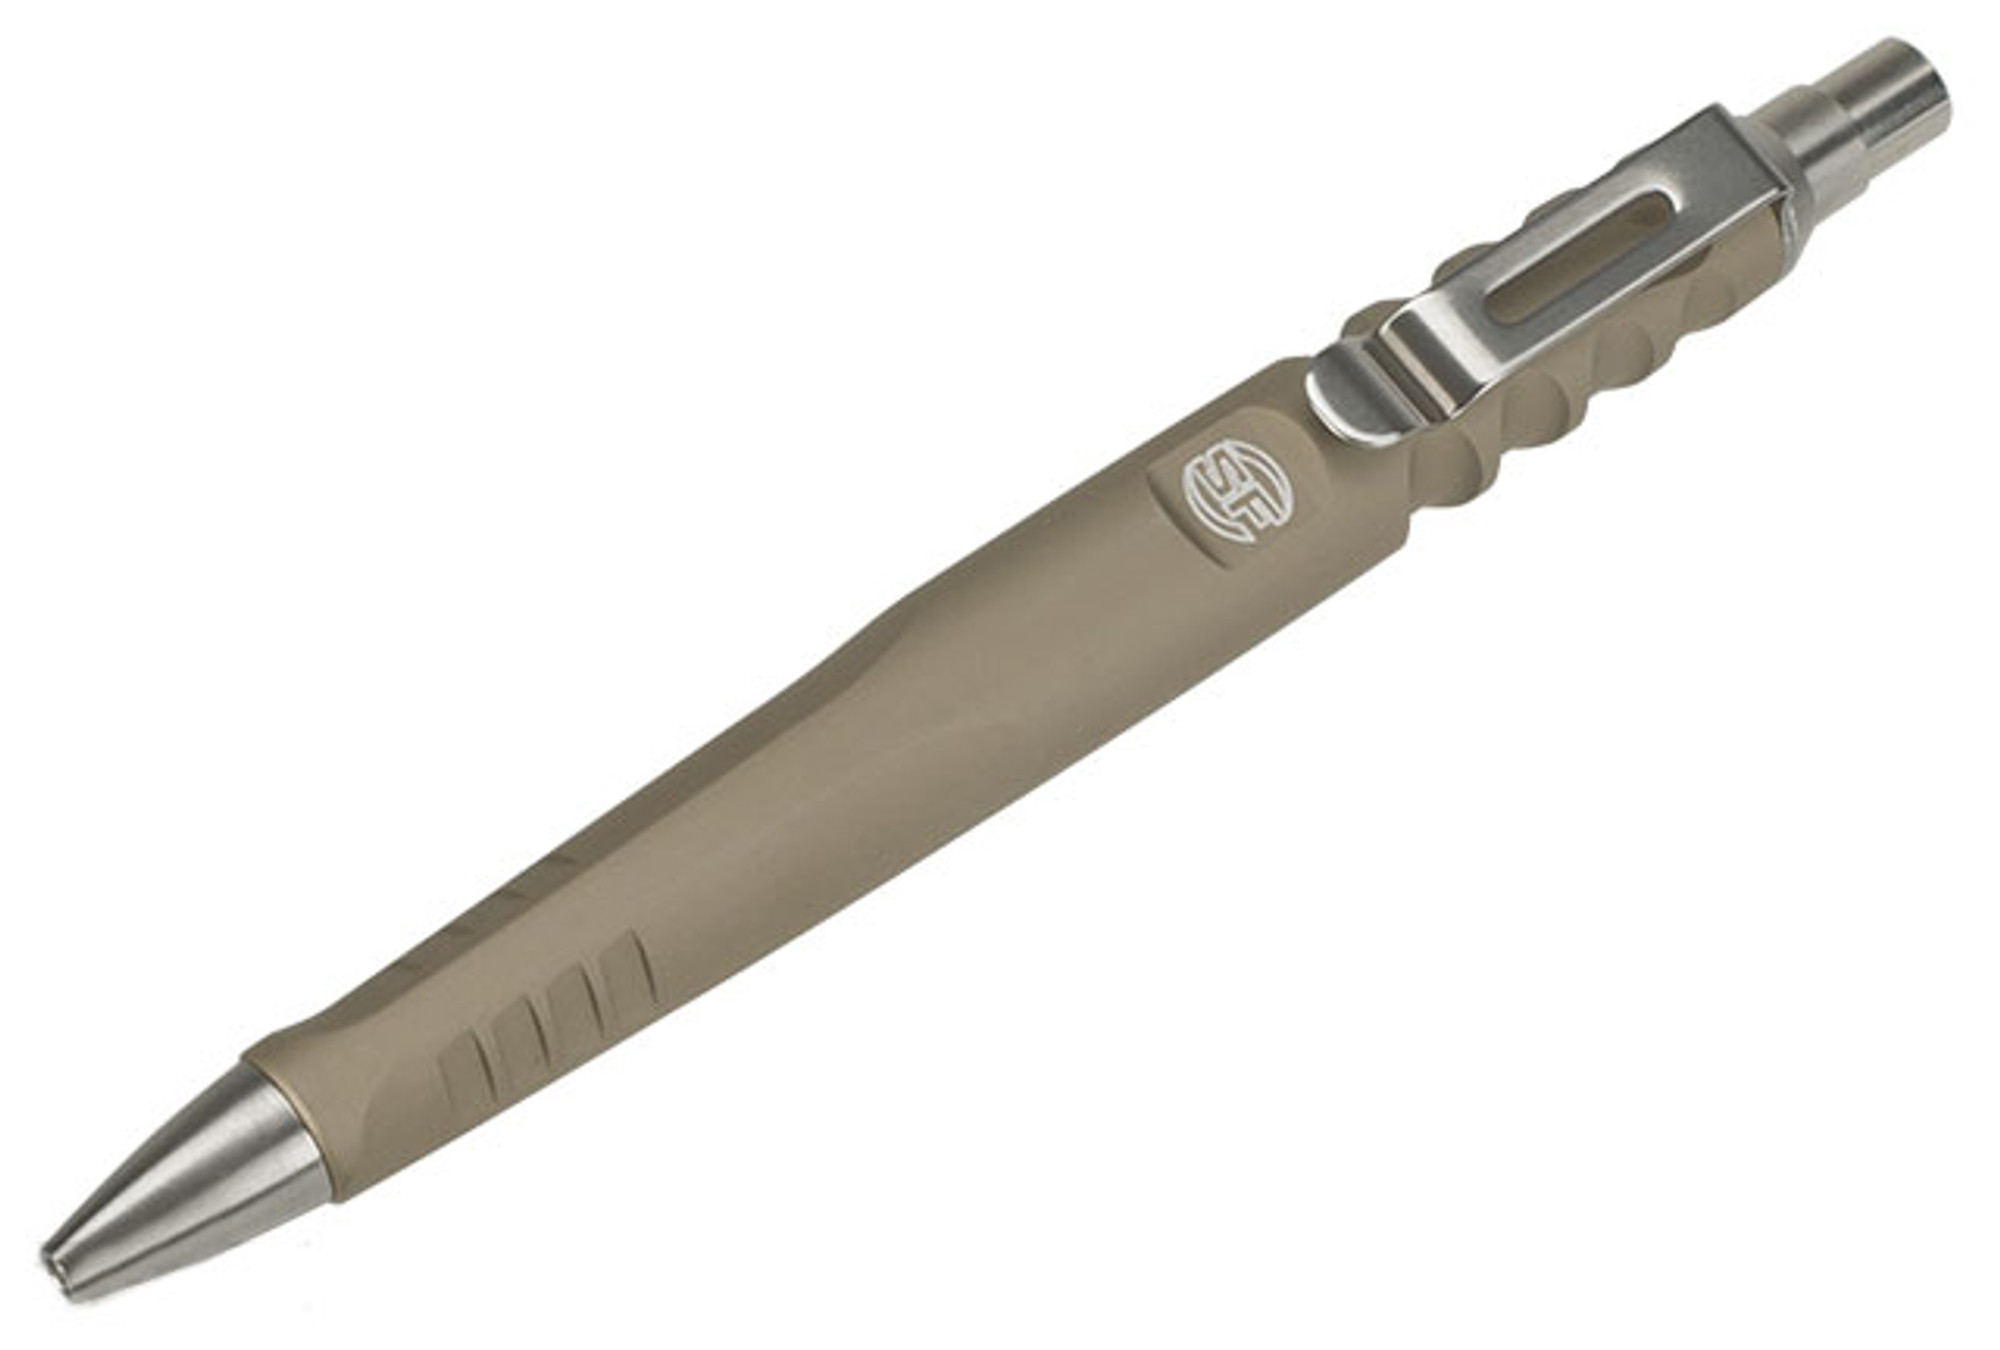 Surefire Pen III Precision Writing Instrument - Tan